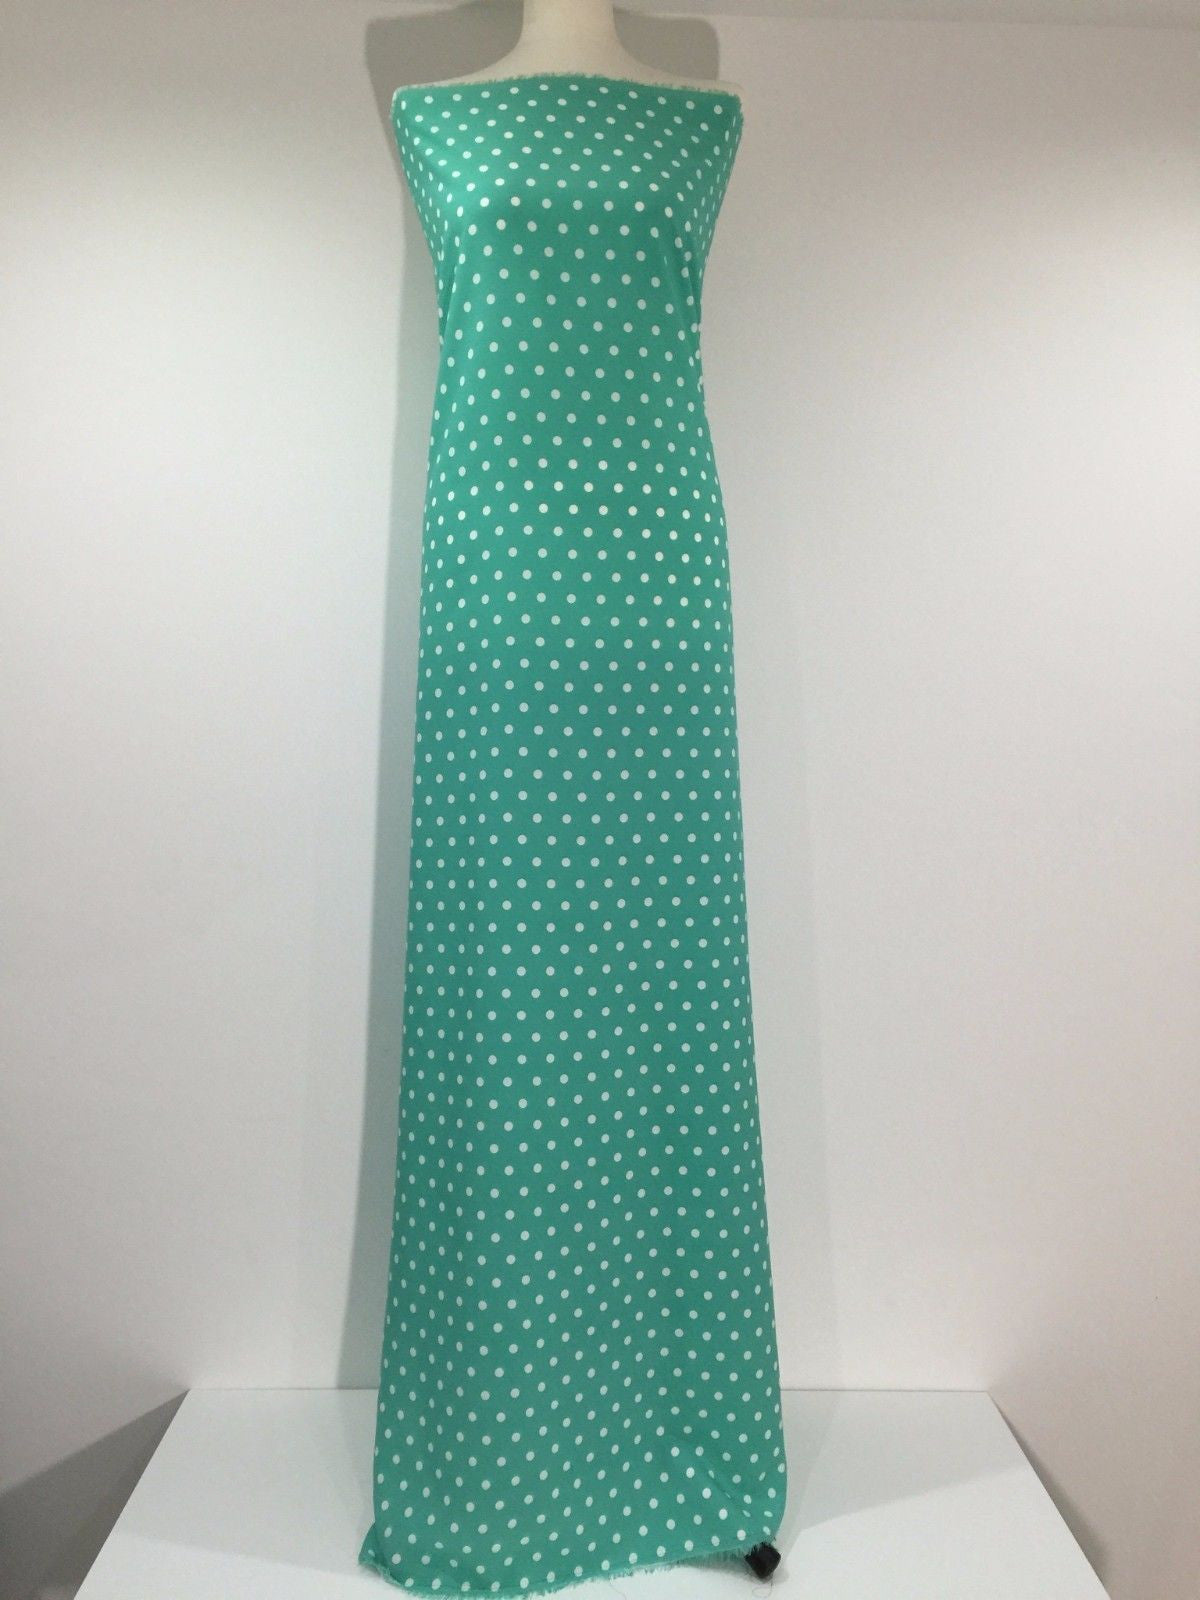 Aqua green polka dot peachskin crepe dress fabric 58" M252 Mtex - Midland Textiles & Fabric